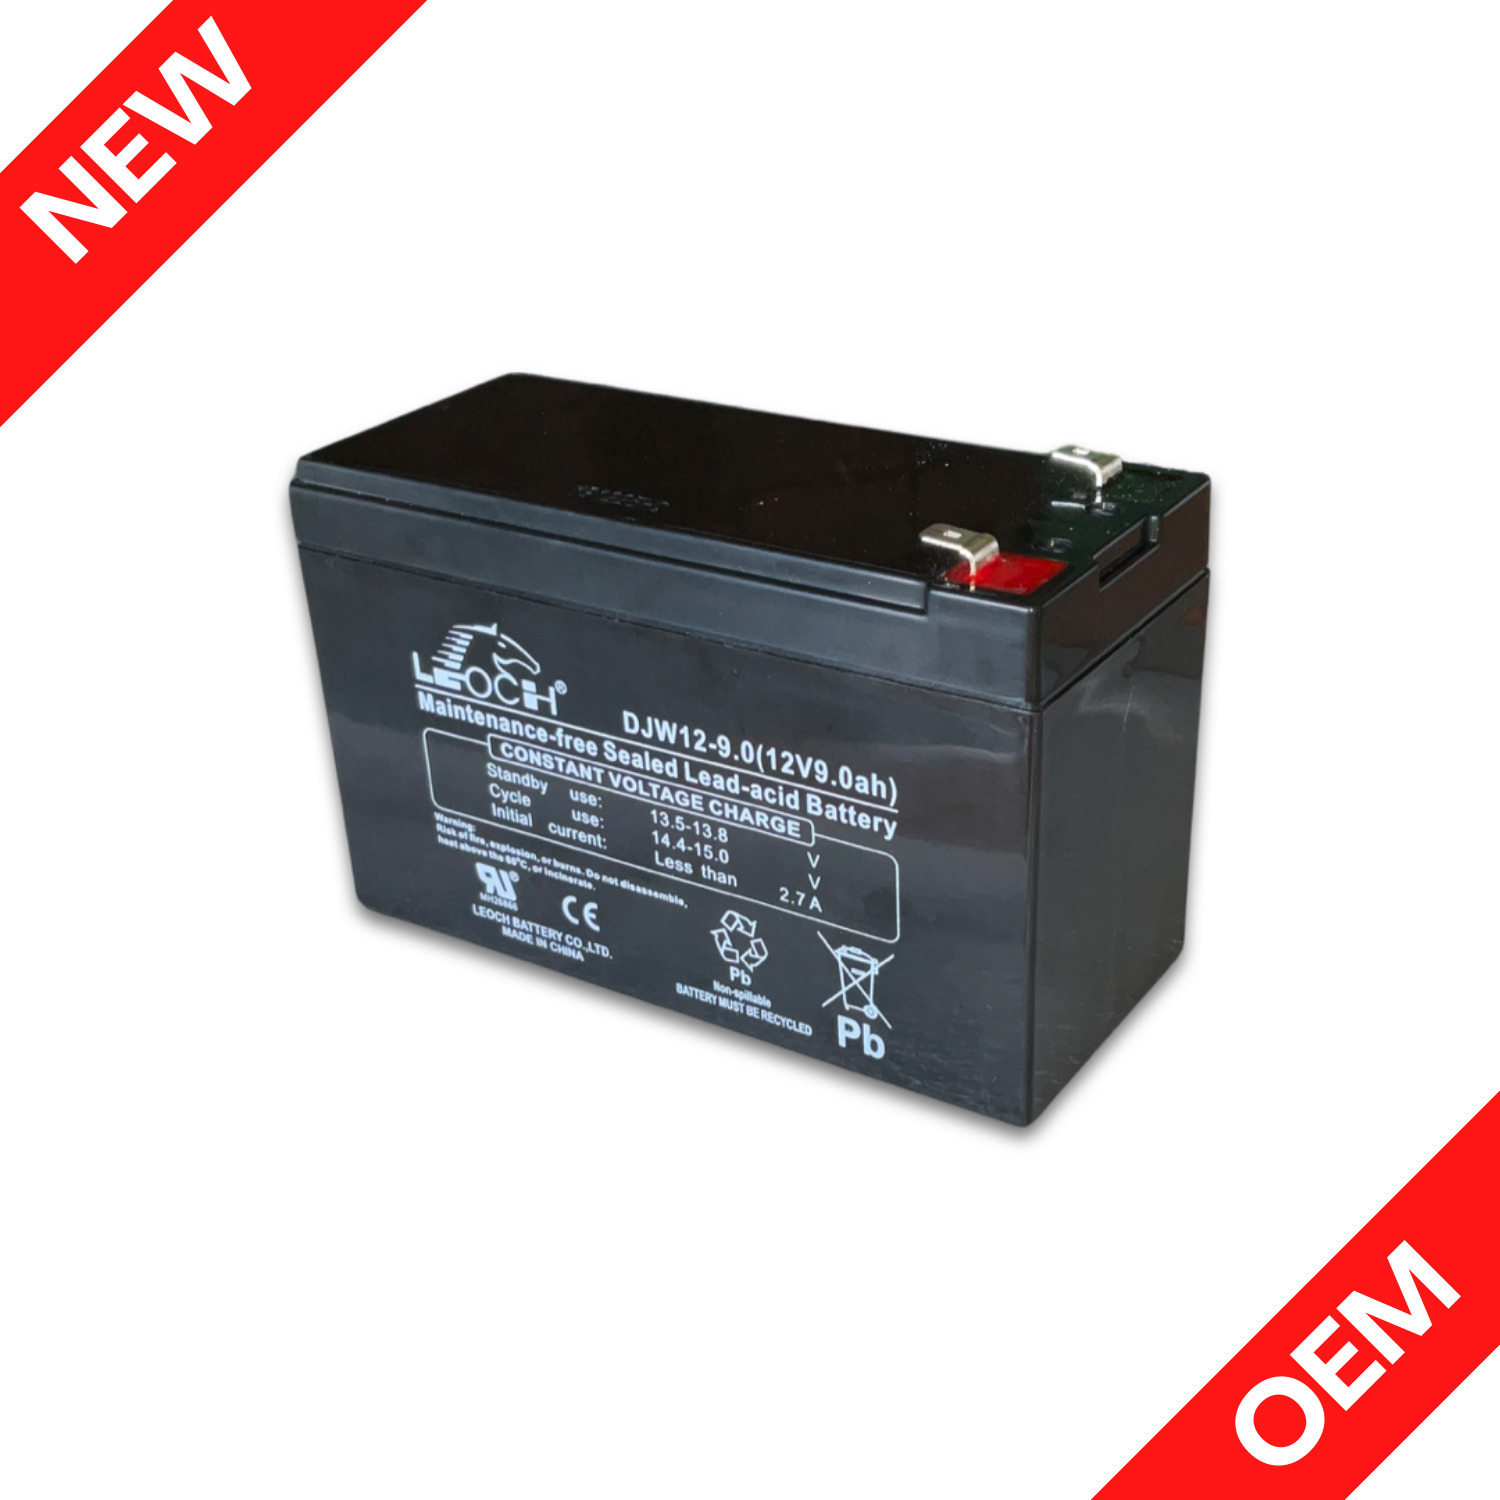 OEM NEW | Leoch DJW12-9.0(12v9.0ah) Sealed Lead Acid Rechargeable Battery 